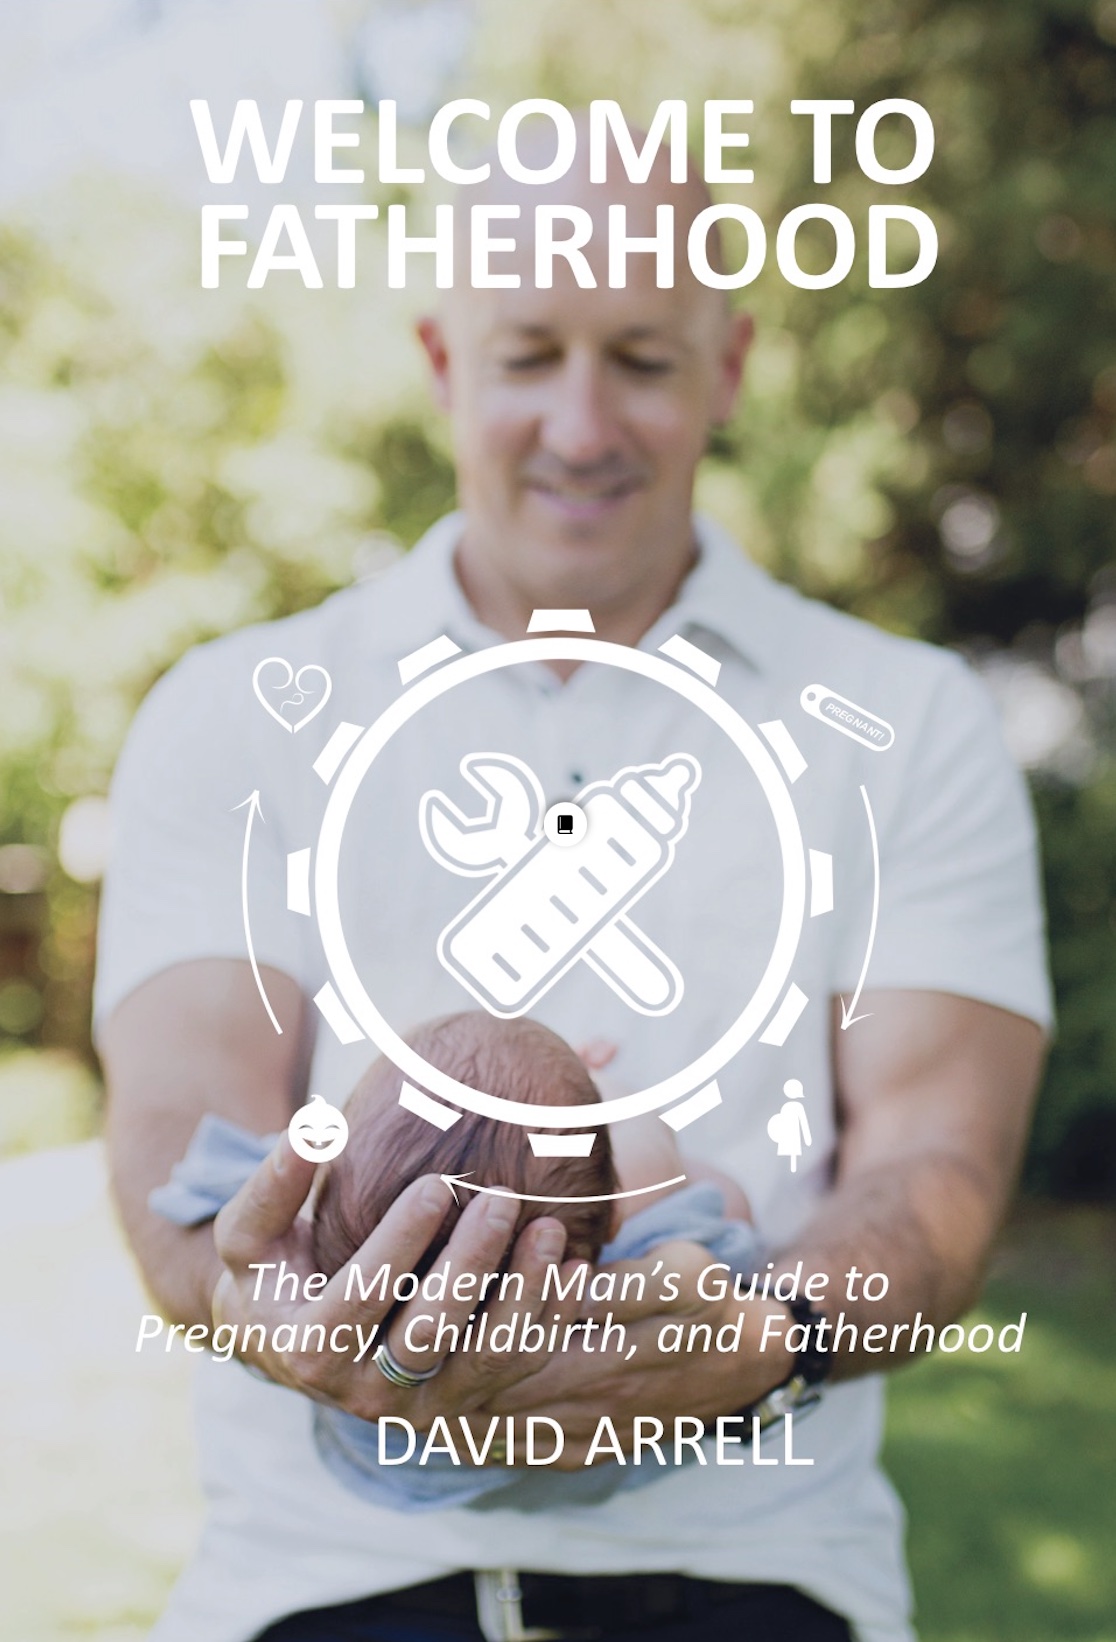 Fatherhood And Healthy Masculinity With Welcome to Fatherhood Author David Arrell